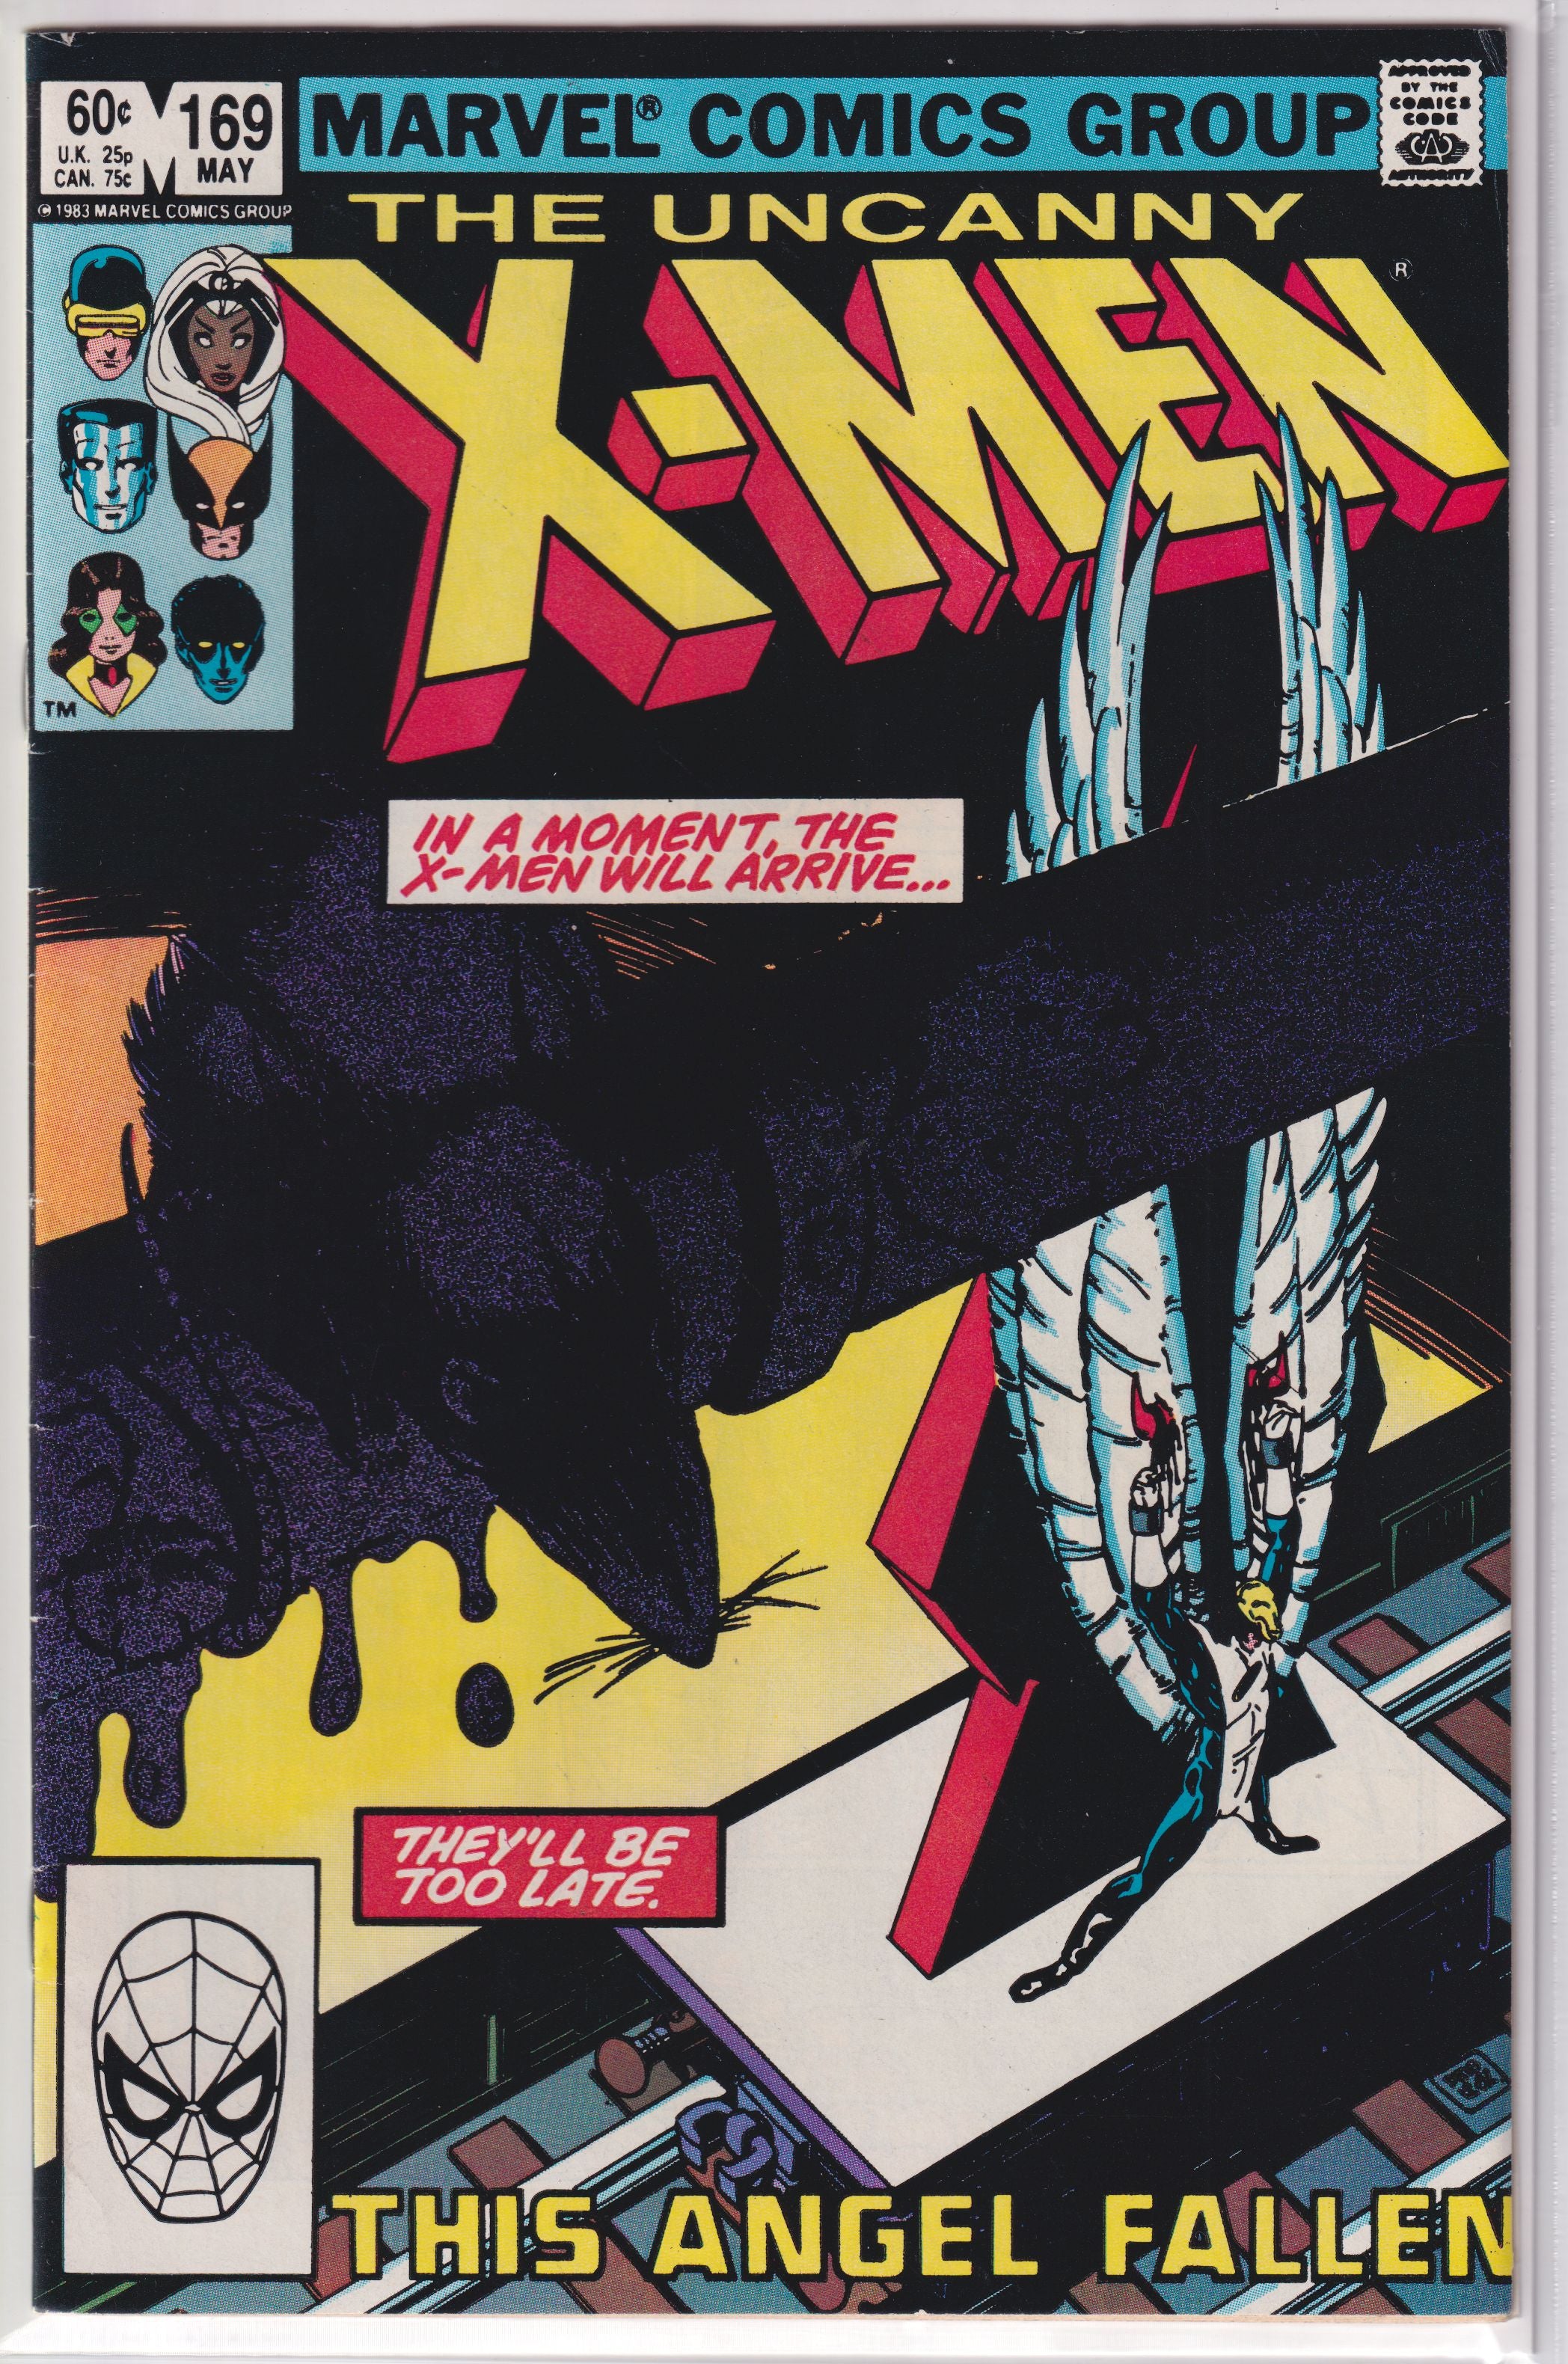 UNCANNY X-MEN (1981) #169 FN+